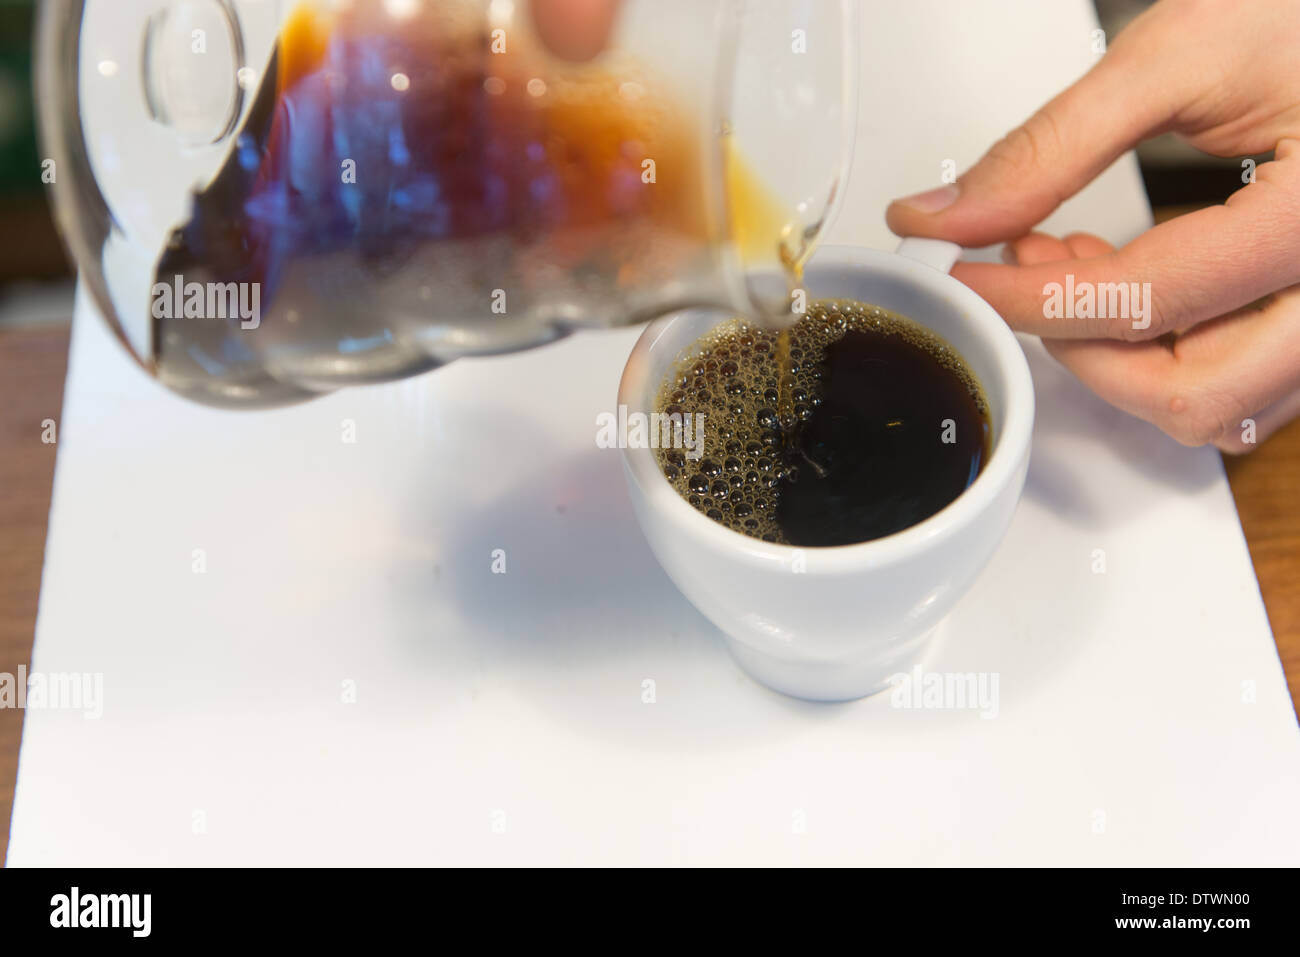 preparation of coffee by barista via pourover method Stock Photo